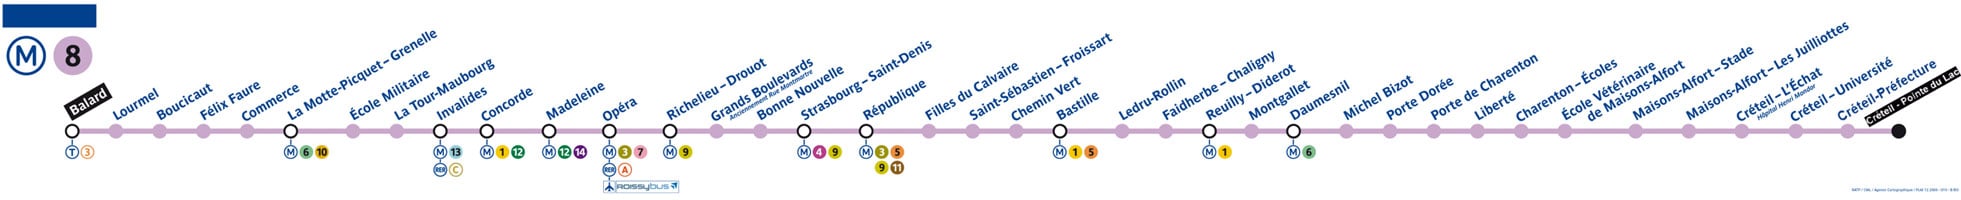 Paris metro line 8: all the stations - PARISCityVISION